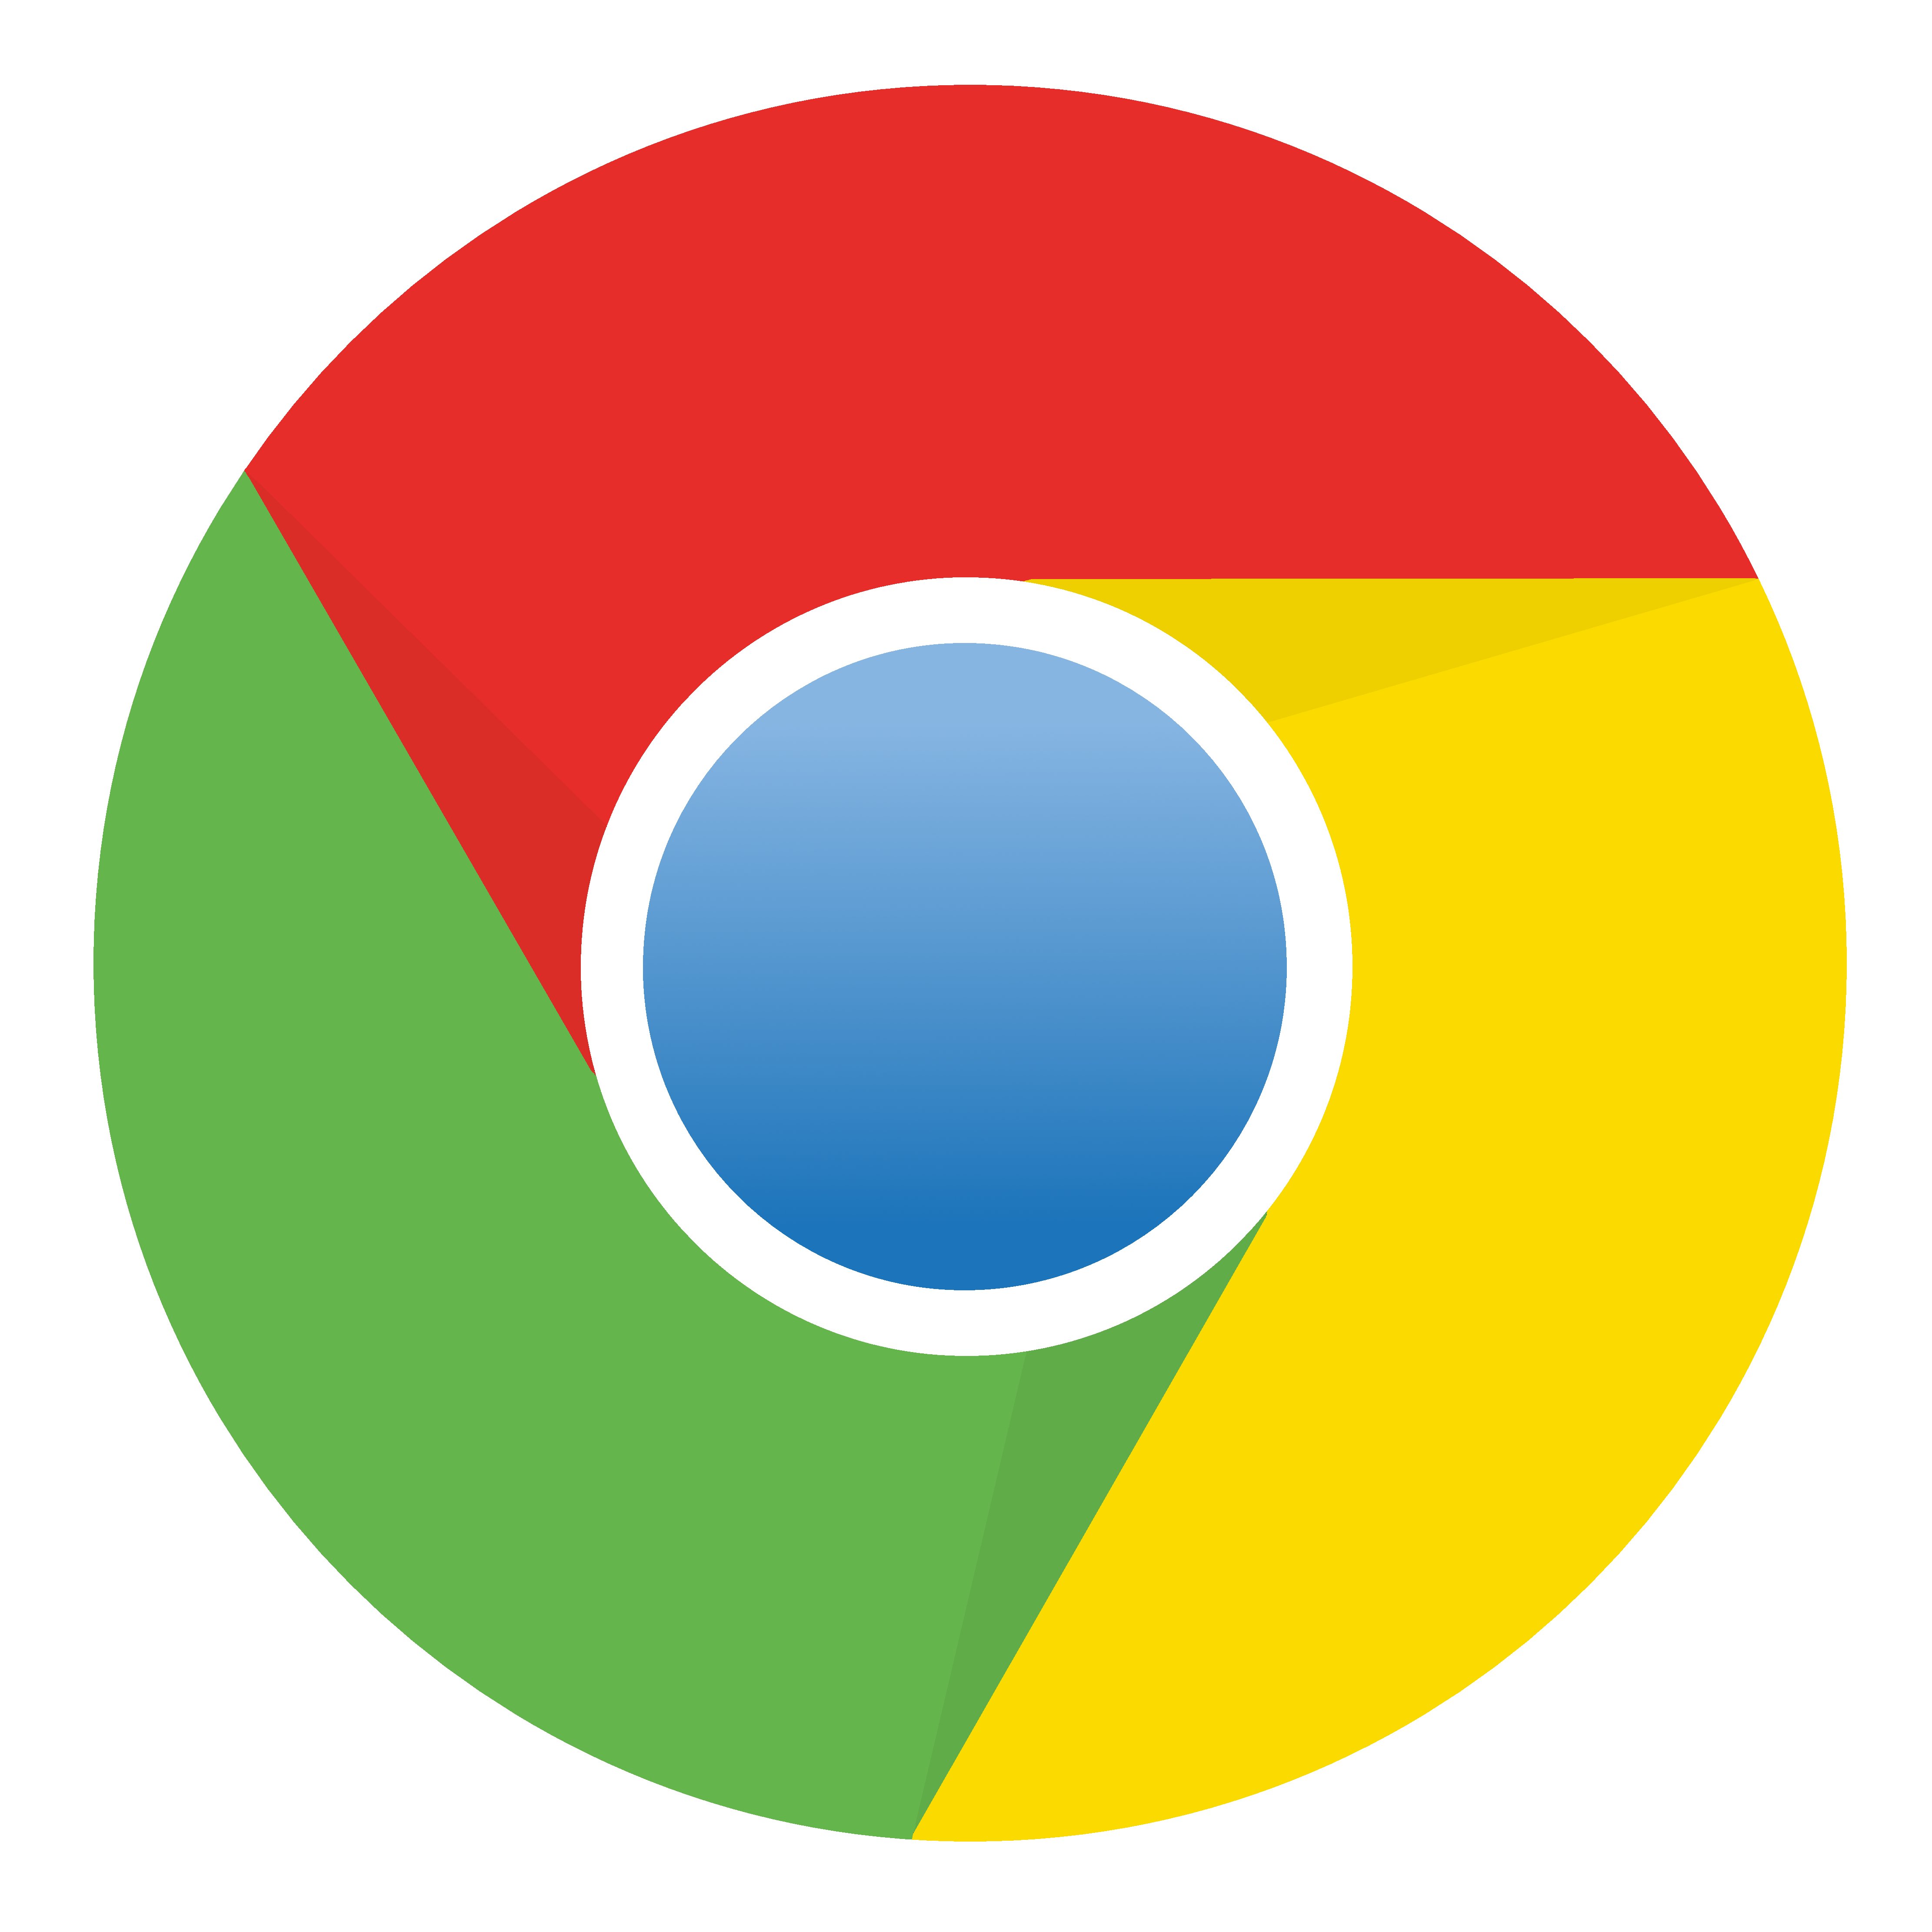 Chrome Logo | Symbol, History, PNG (3840*2160)